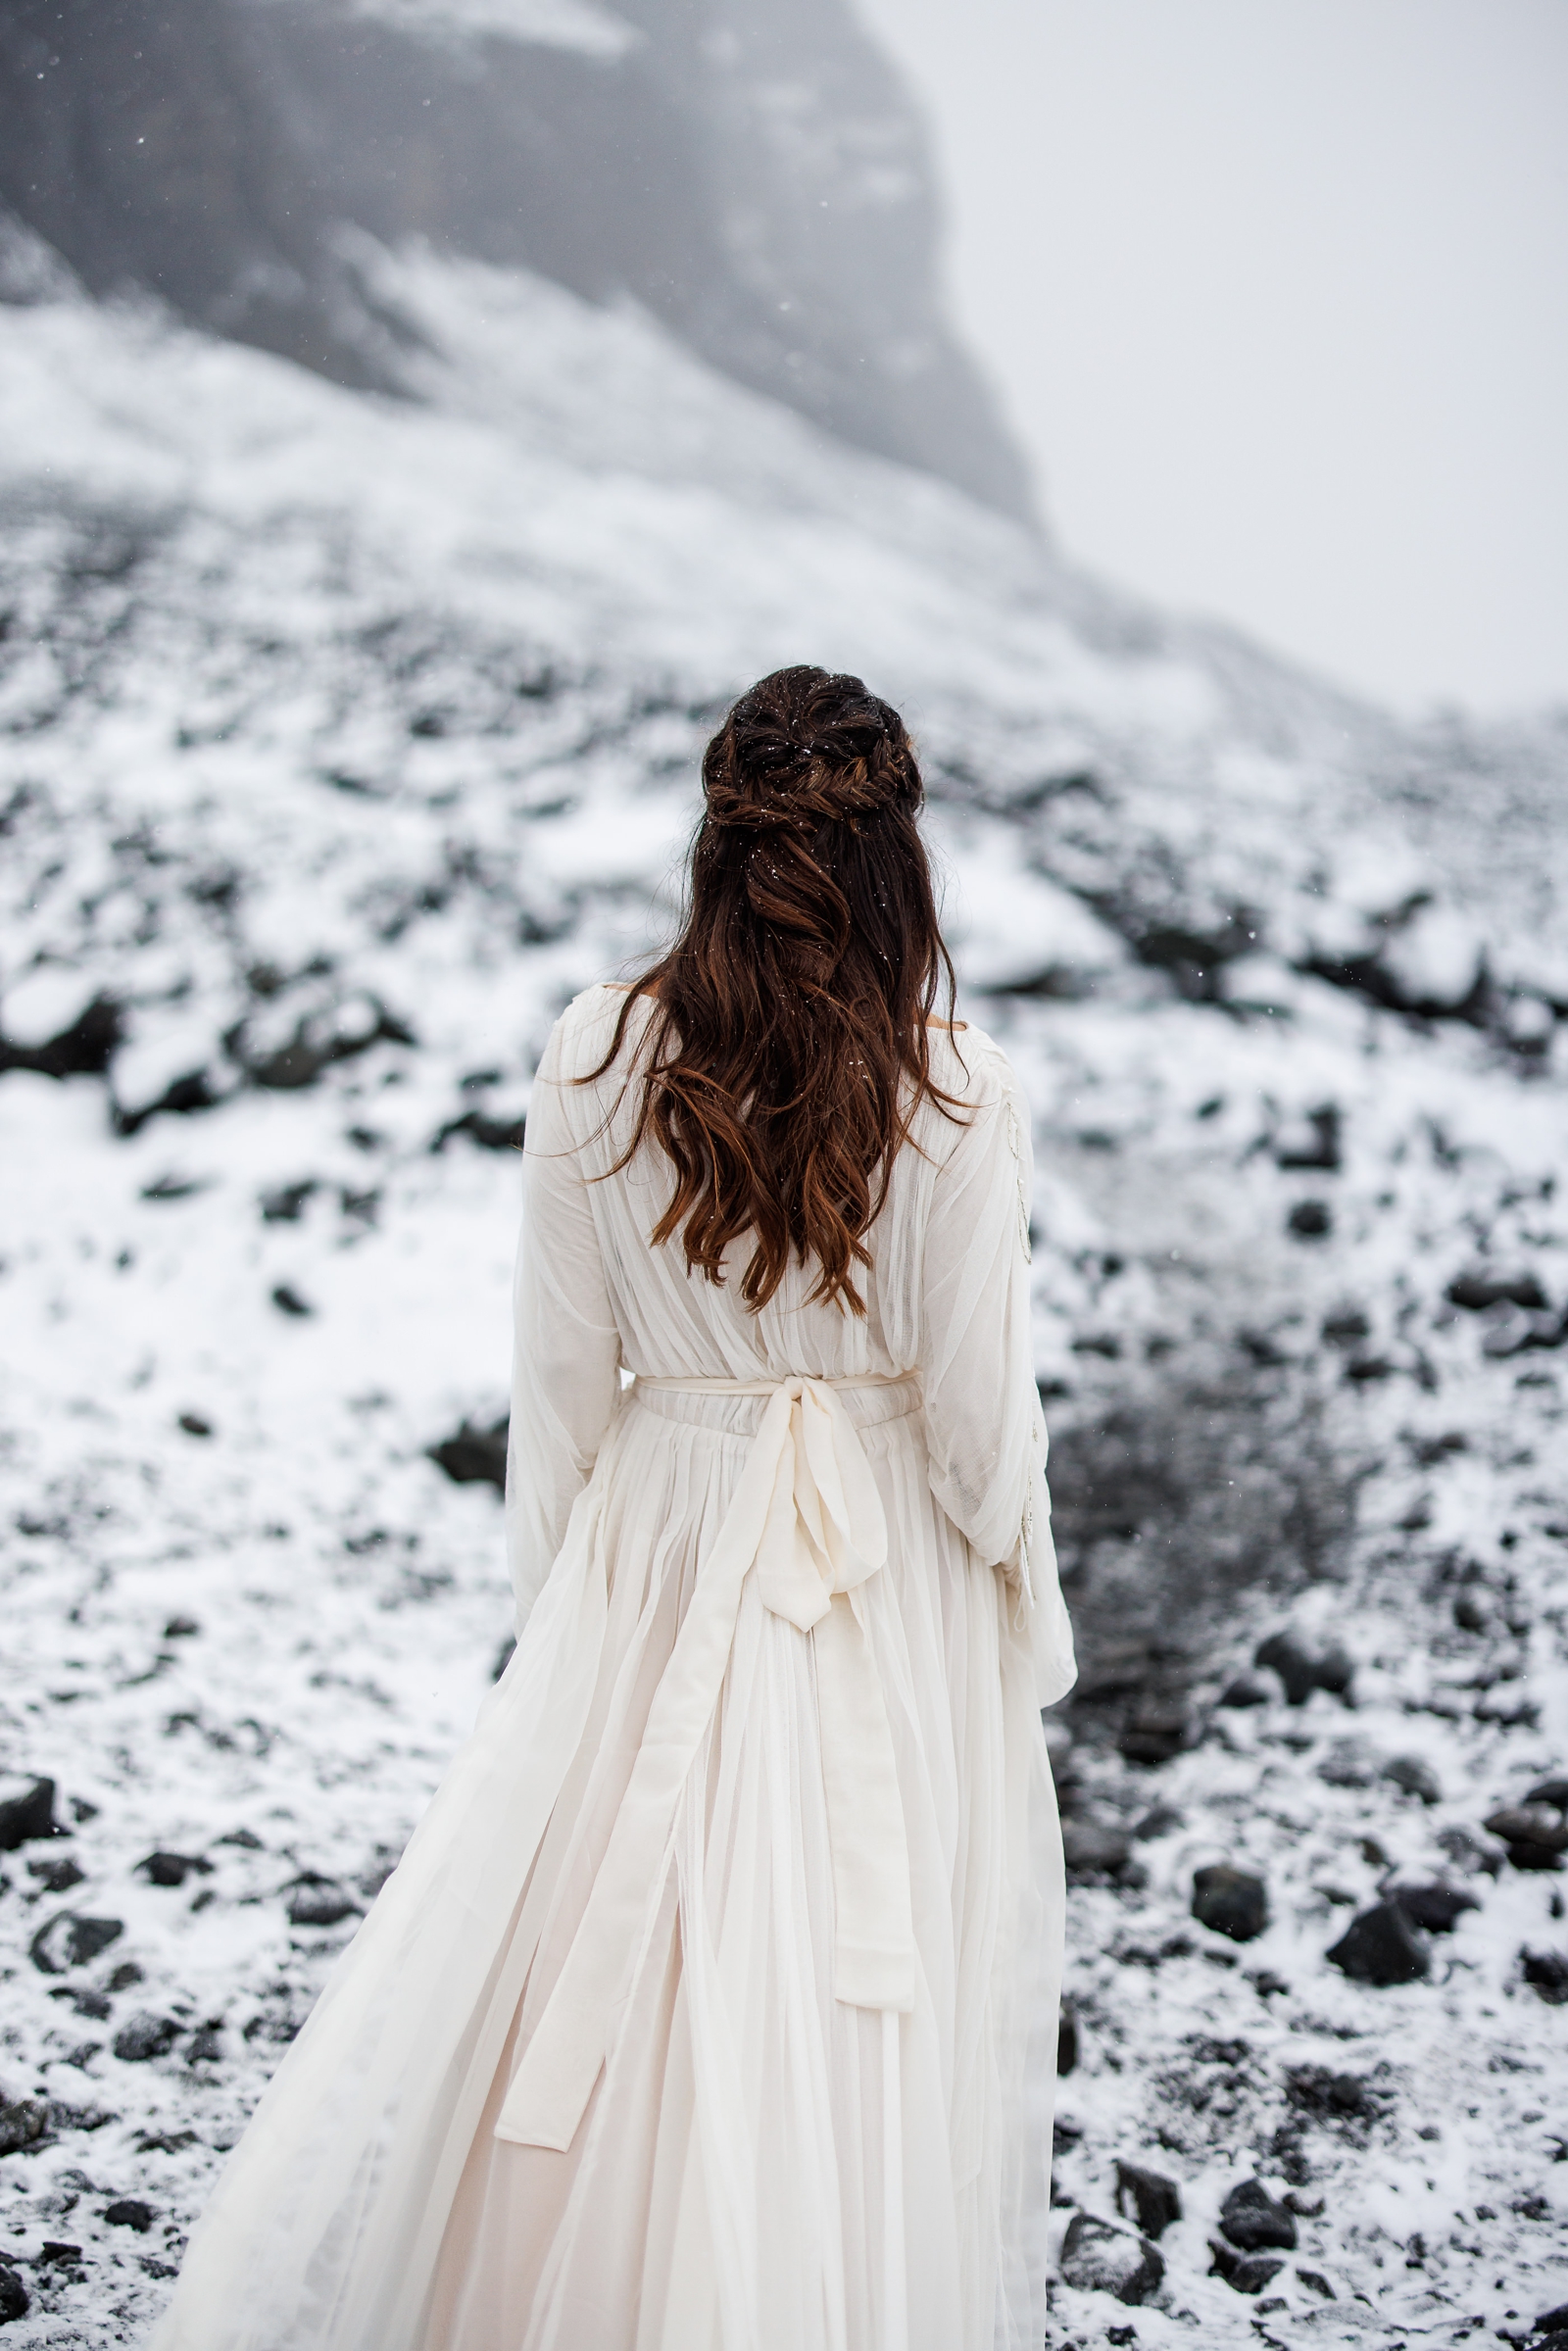 A bride walks into a snowy Narnia landscape in Iceland. 